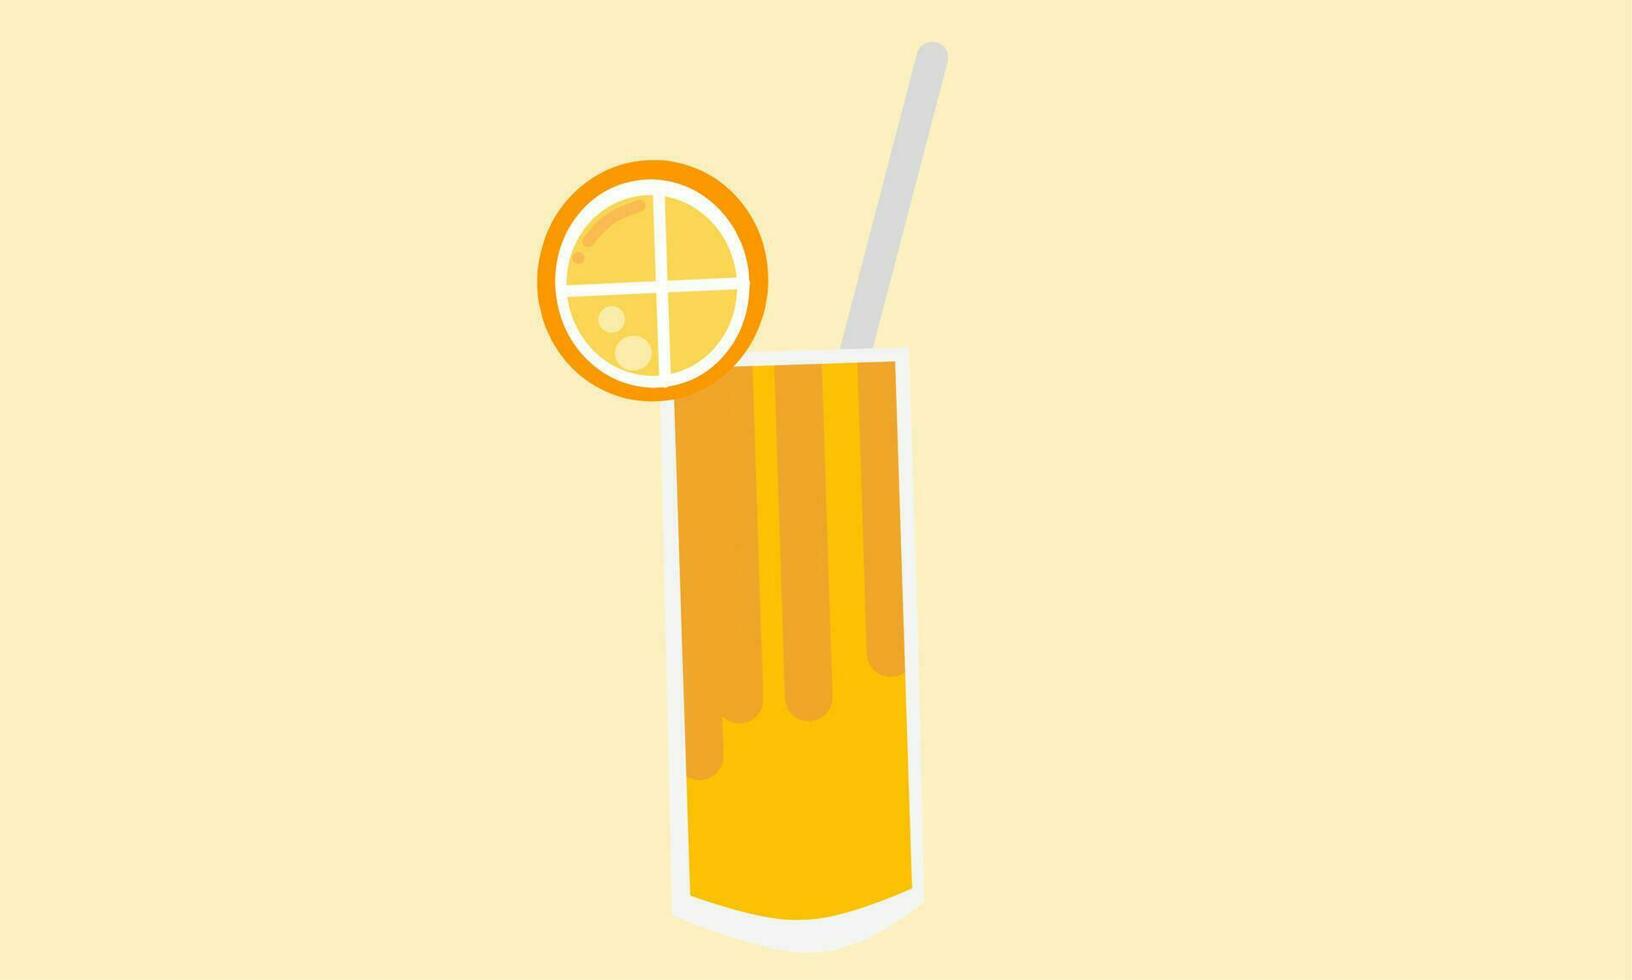 vetor ilustração, laranja beber dentro vidro isolado em laranja fundo